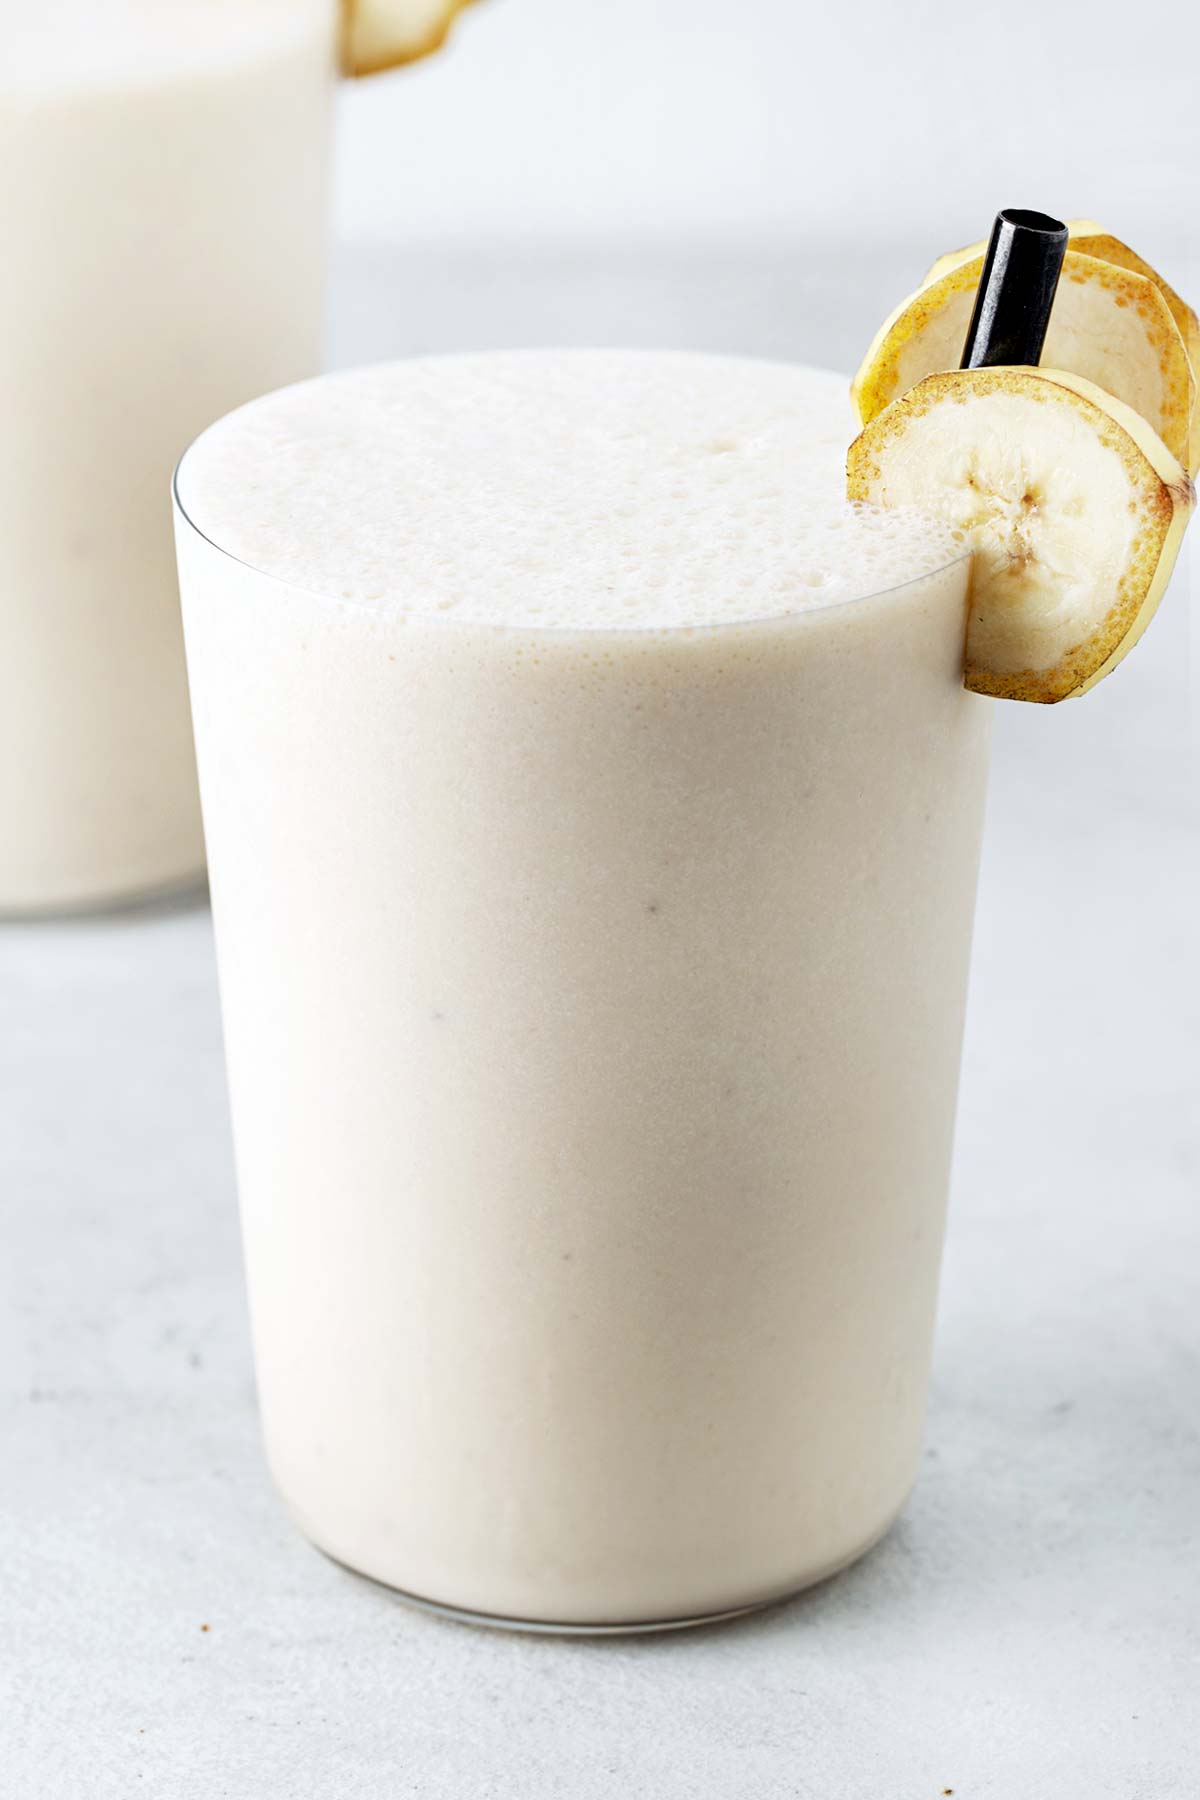 Banana milkshake in a glass with a black straw.